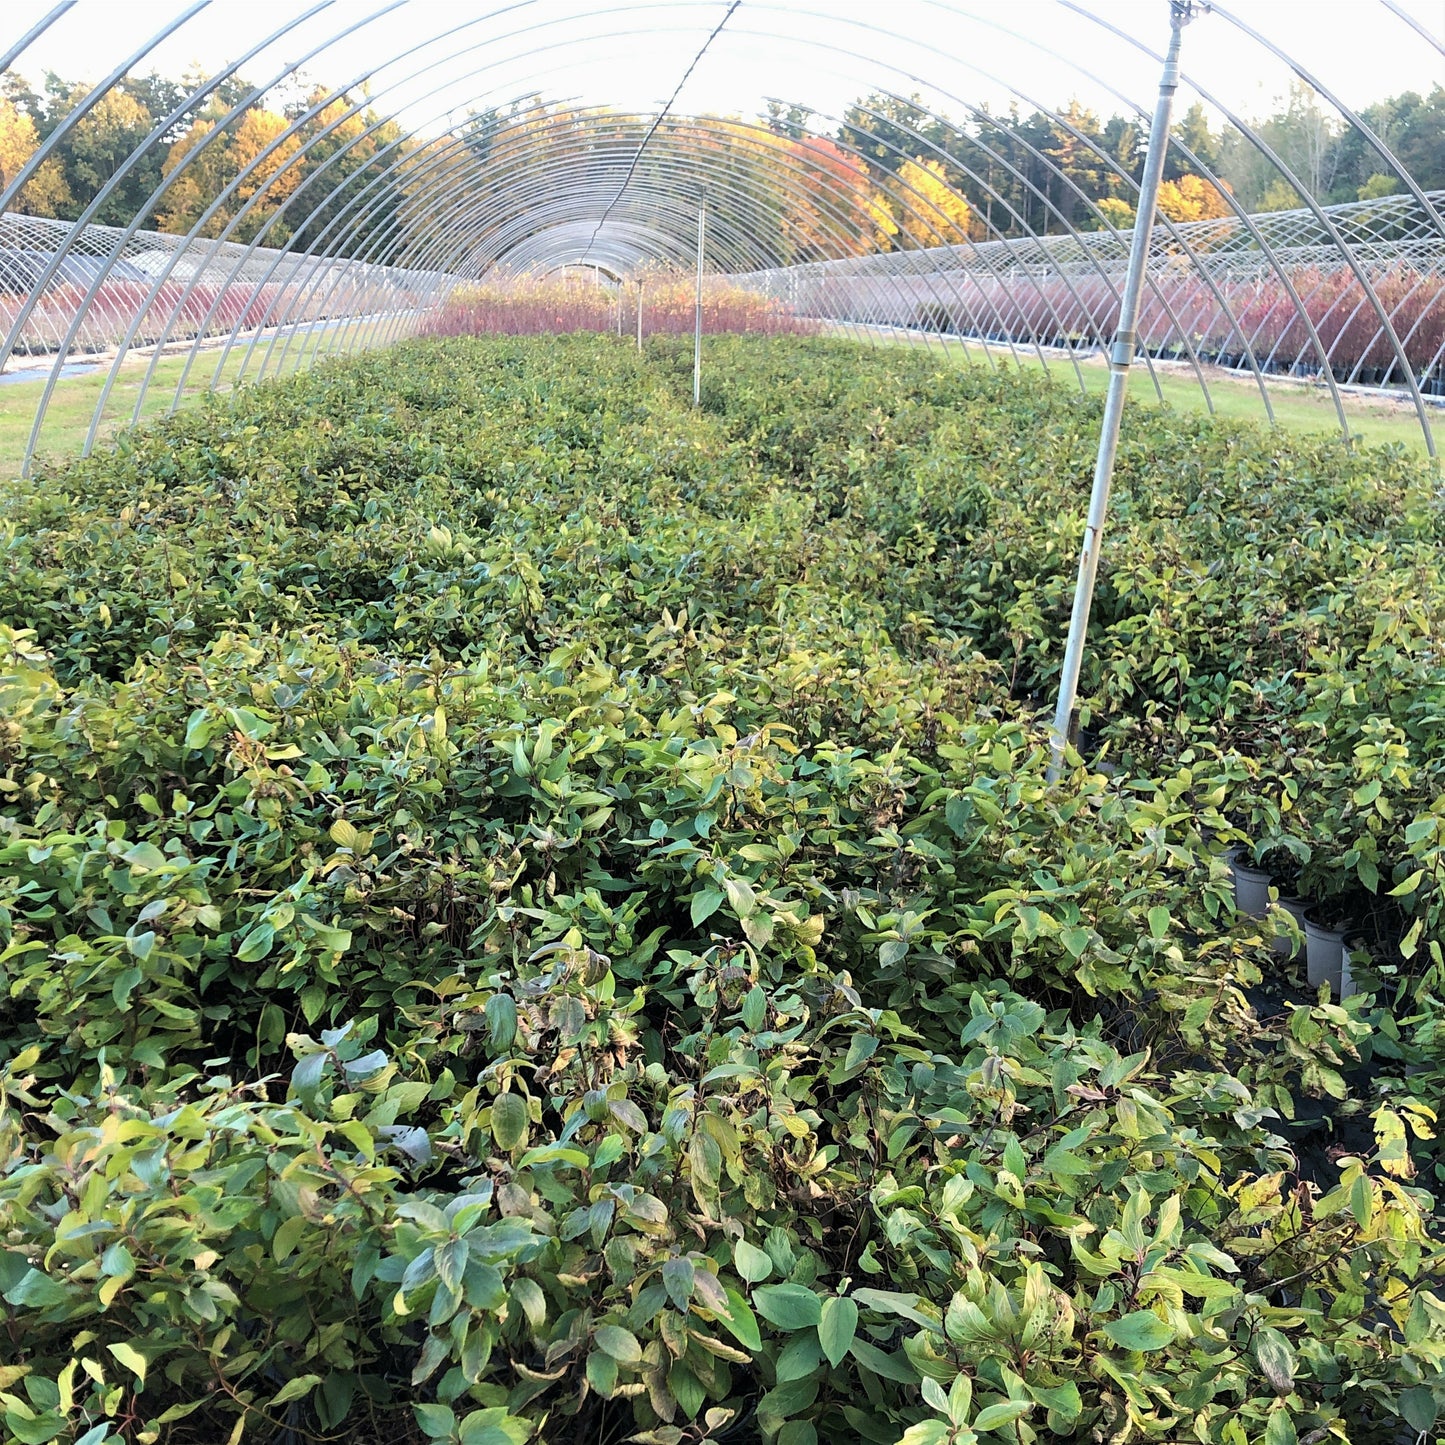 Pots in 1 gallon New Jersey Tea native plants